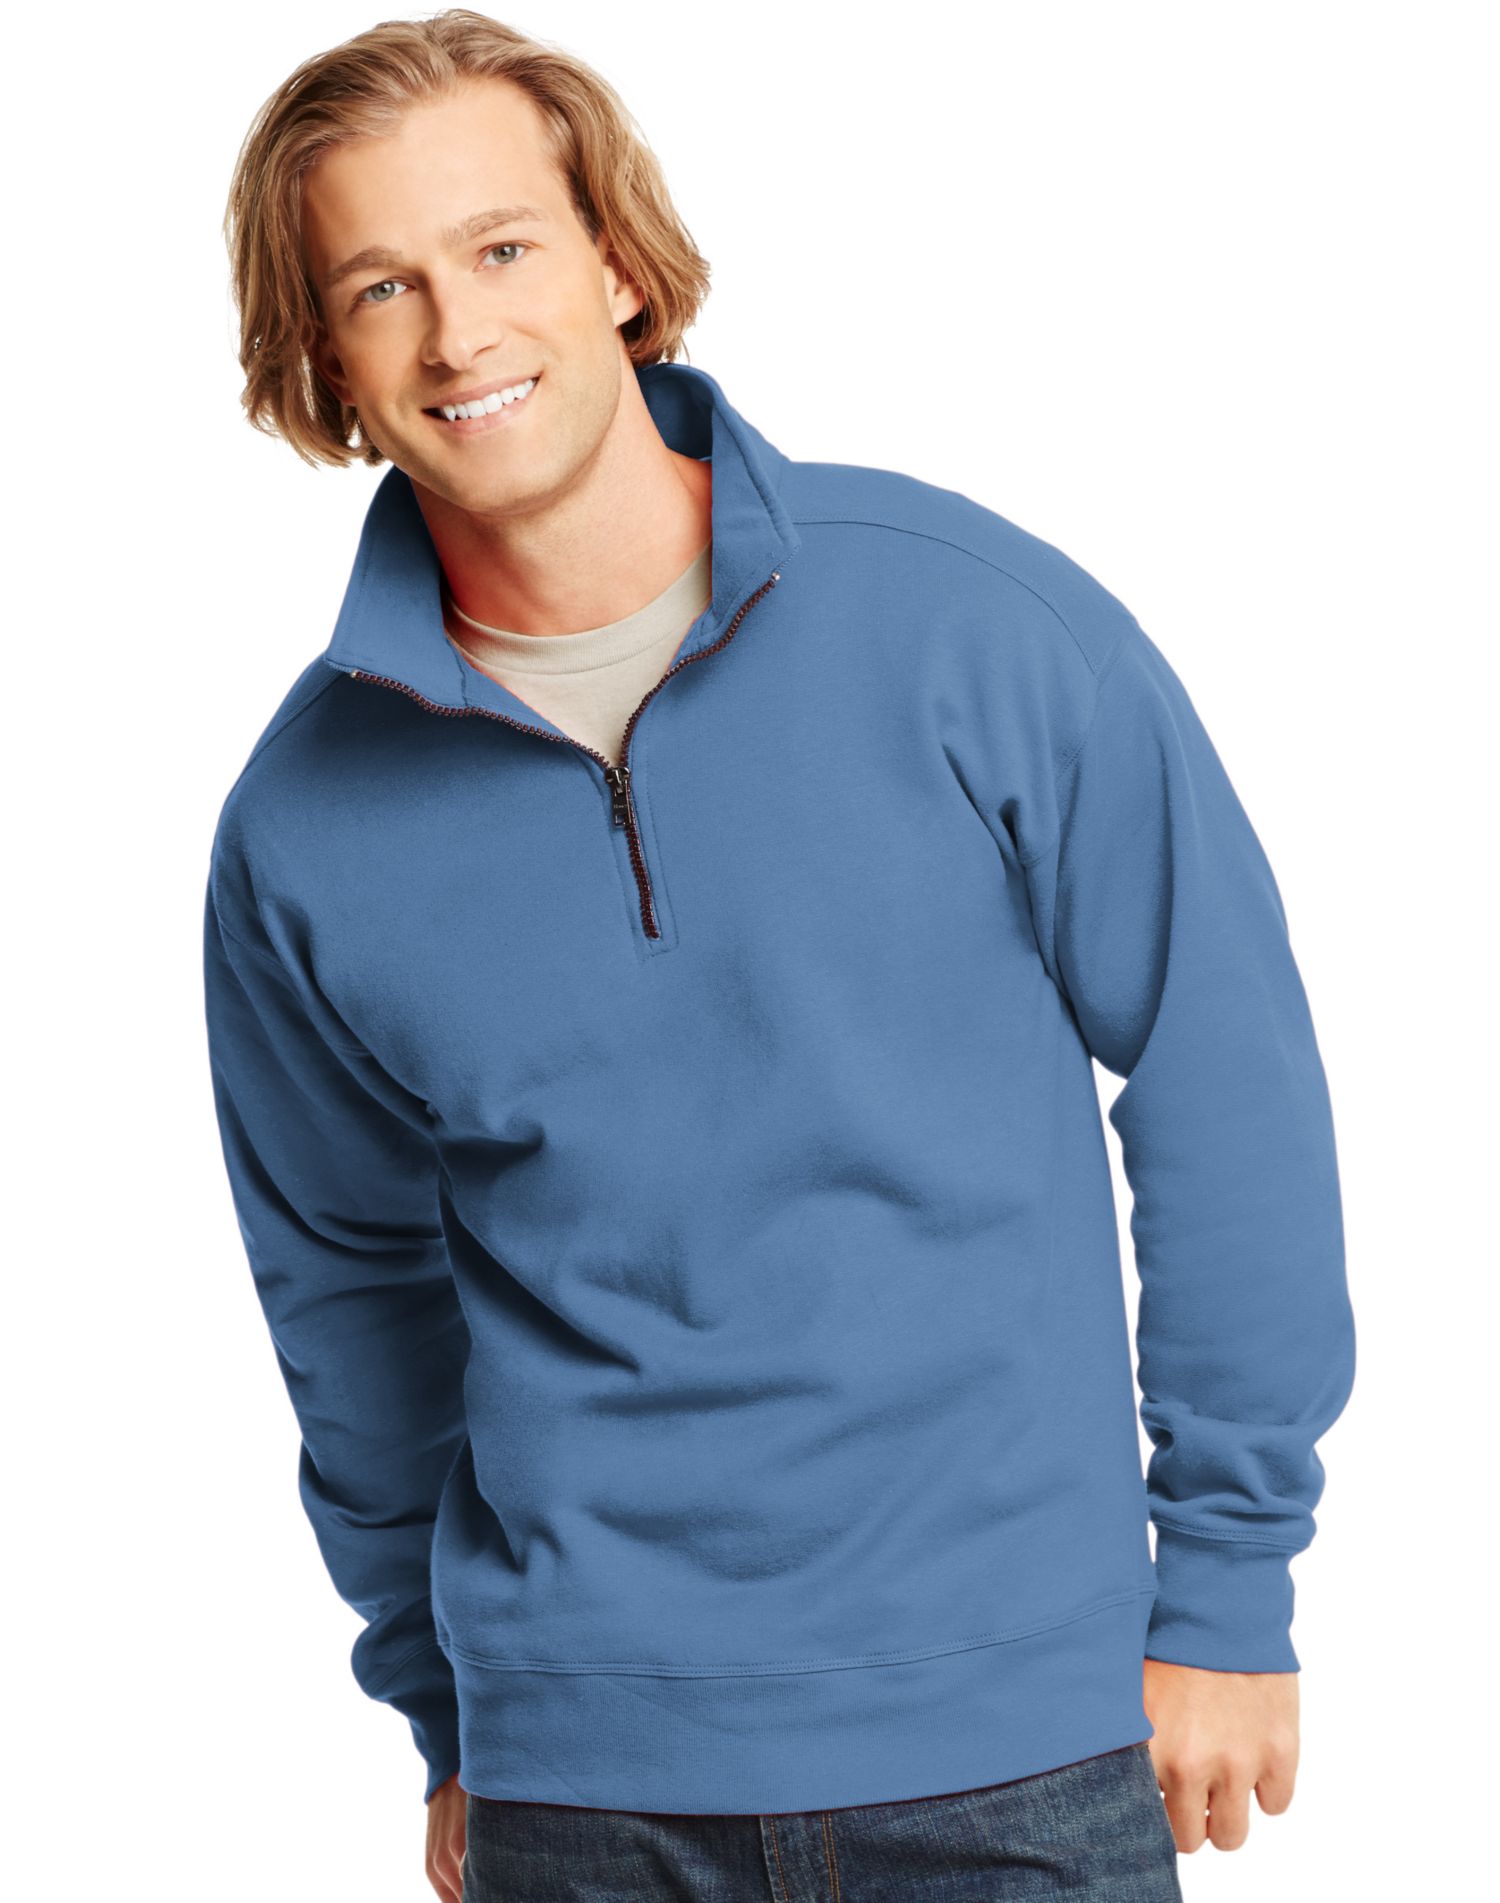 Big Men's Nano Premium Soft Lightweight Fleece Jacket - image 1 of 2